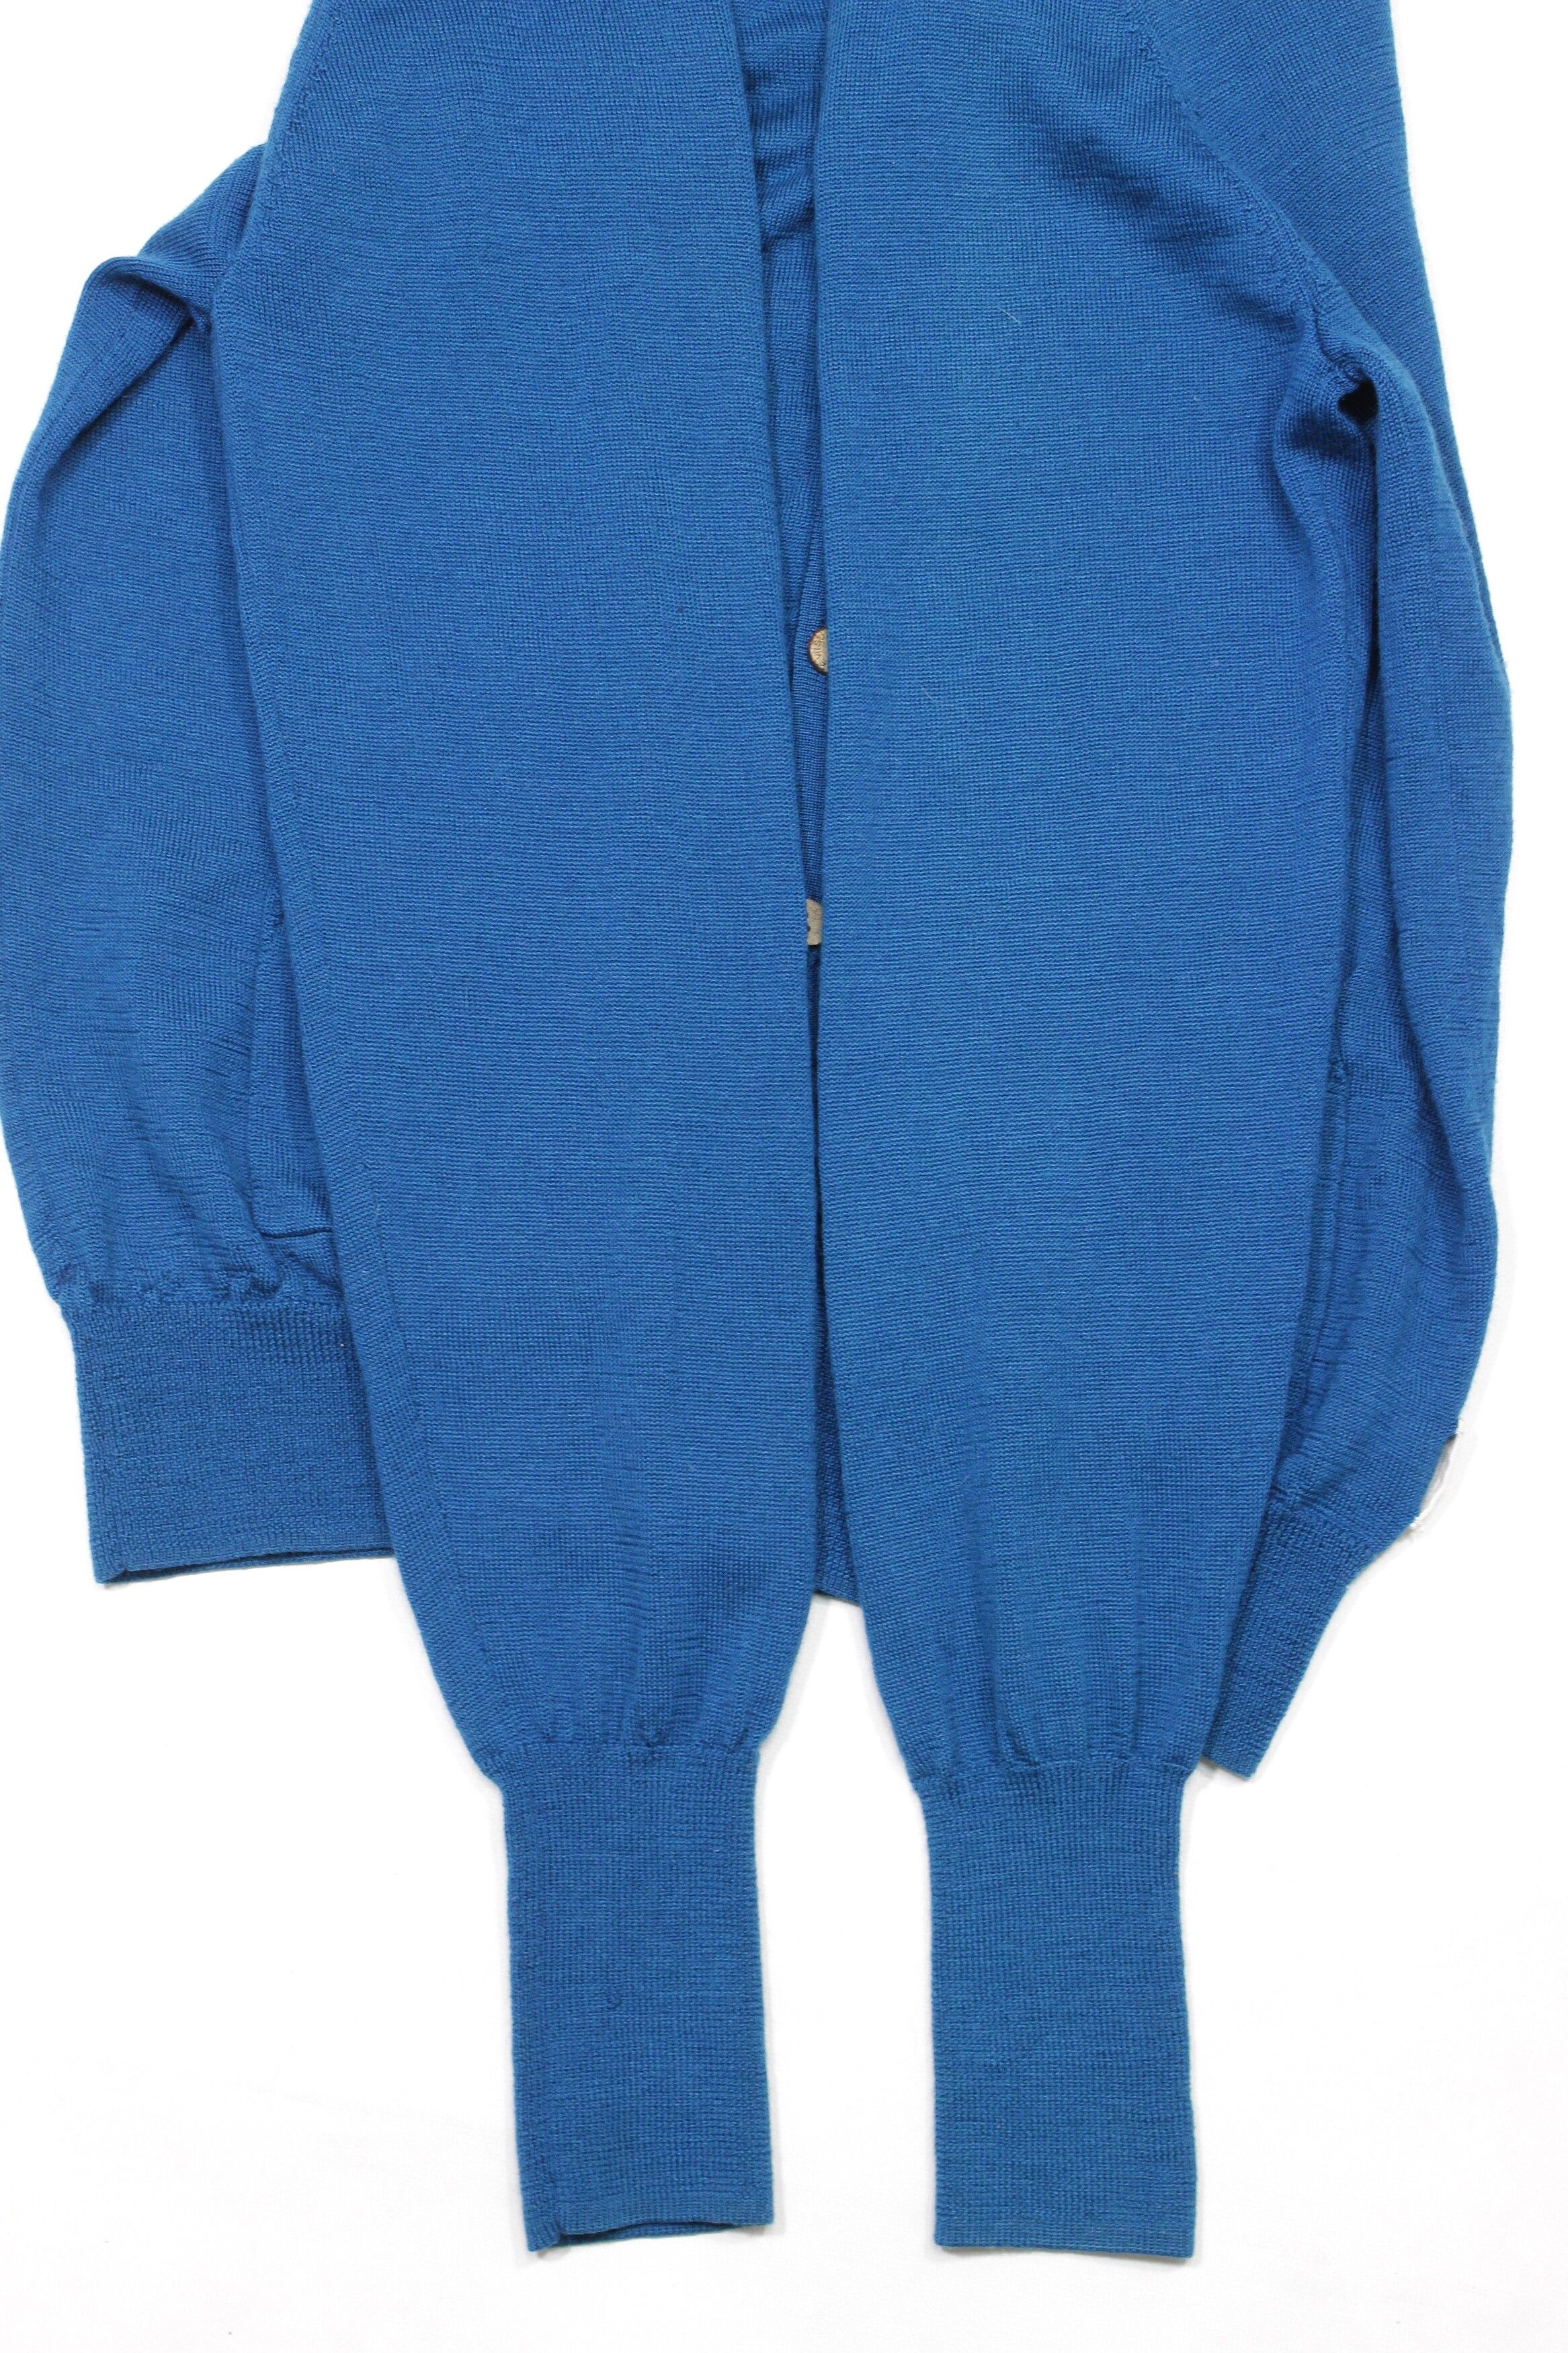 Evisu Wool Cardigan Size US XL / EU 56 / 4 - 5 Thumbnail